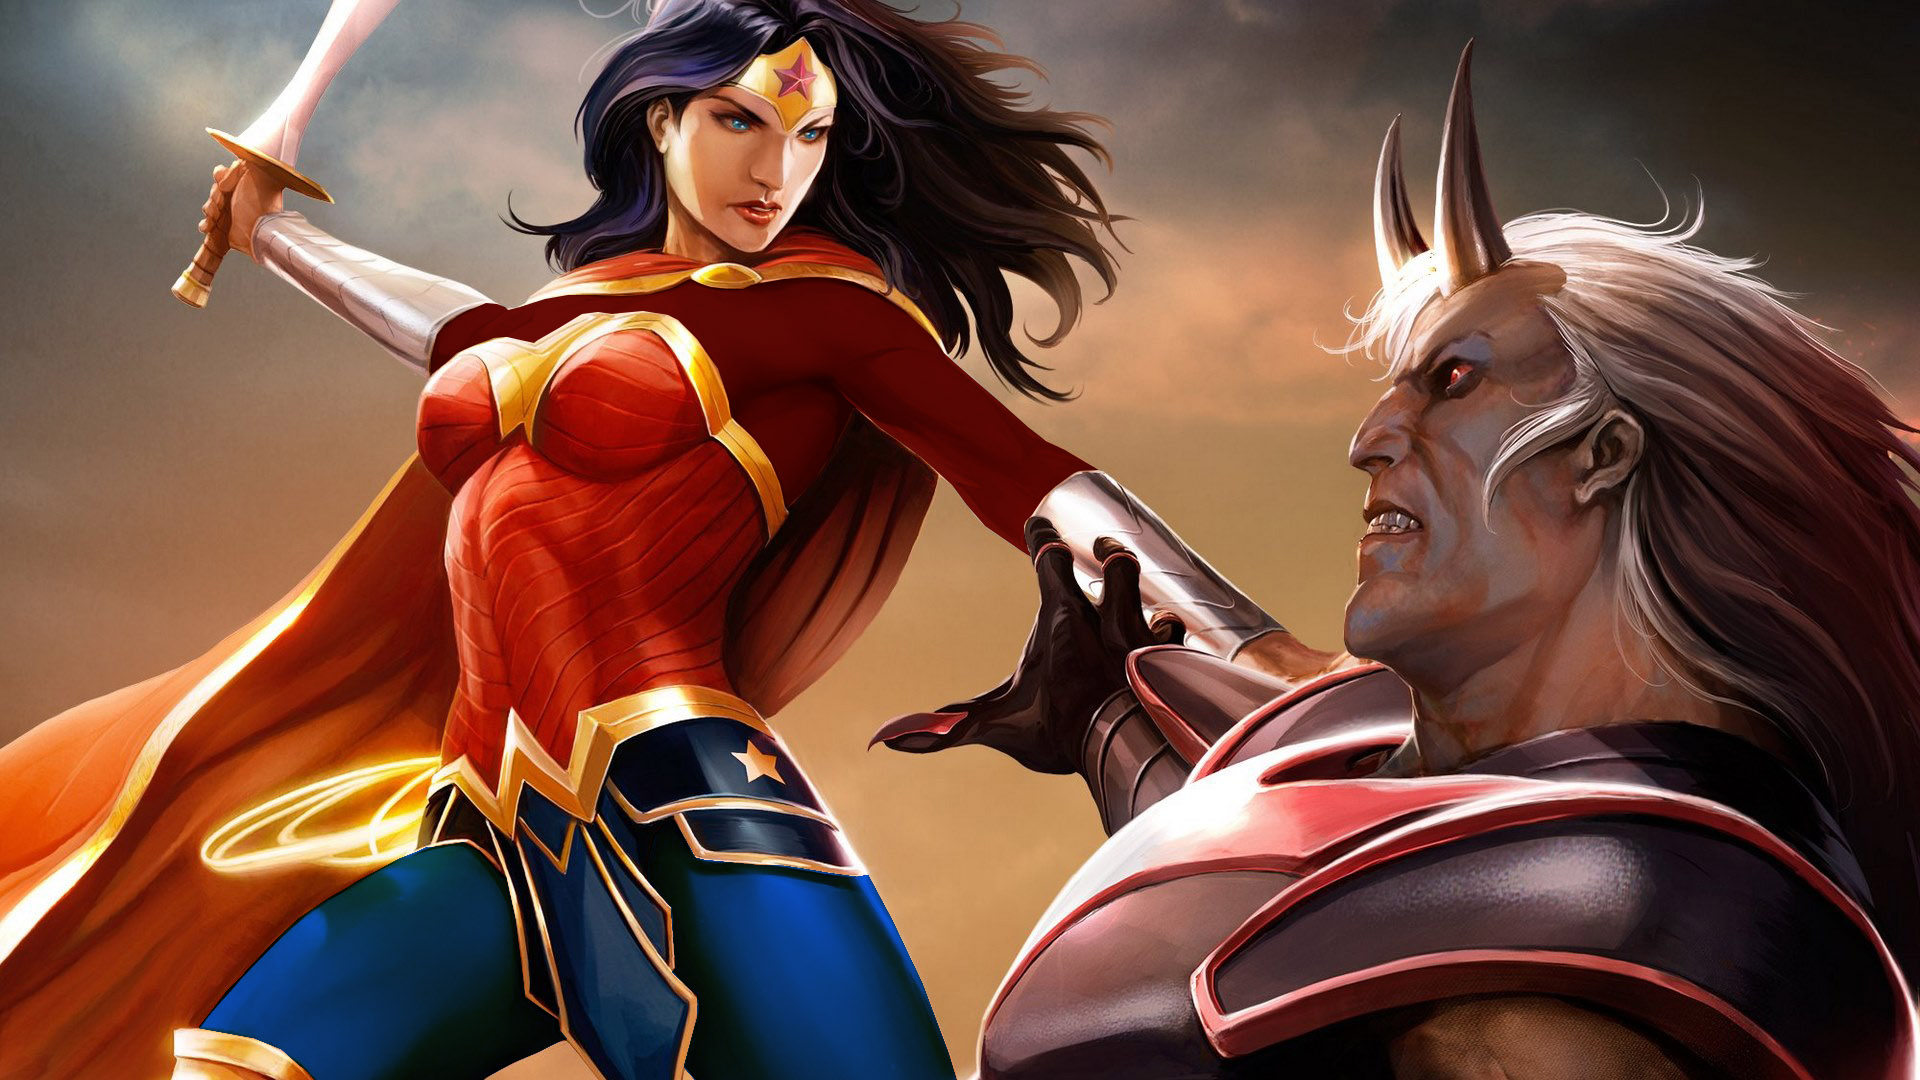 7-Wonder-Woman-Animated-Movie-Poster.jpg